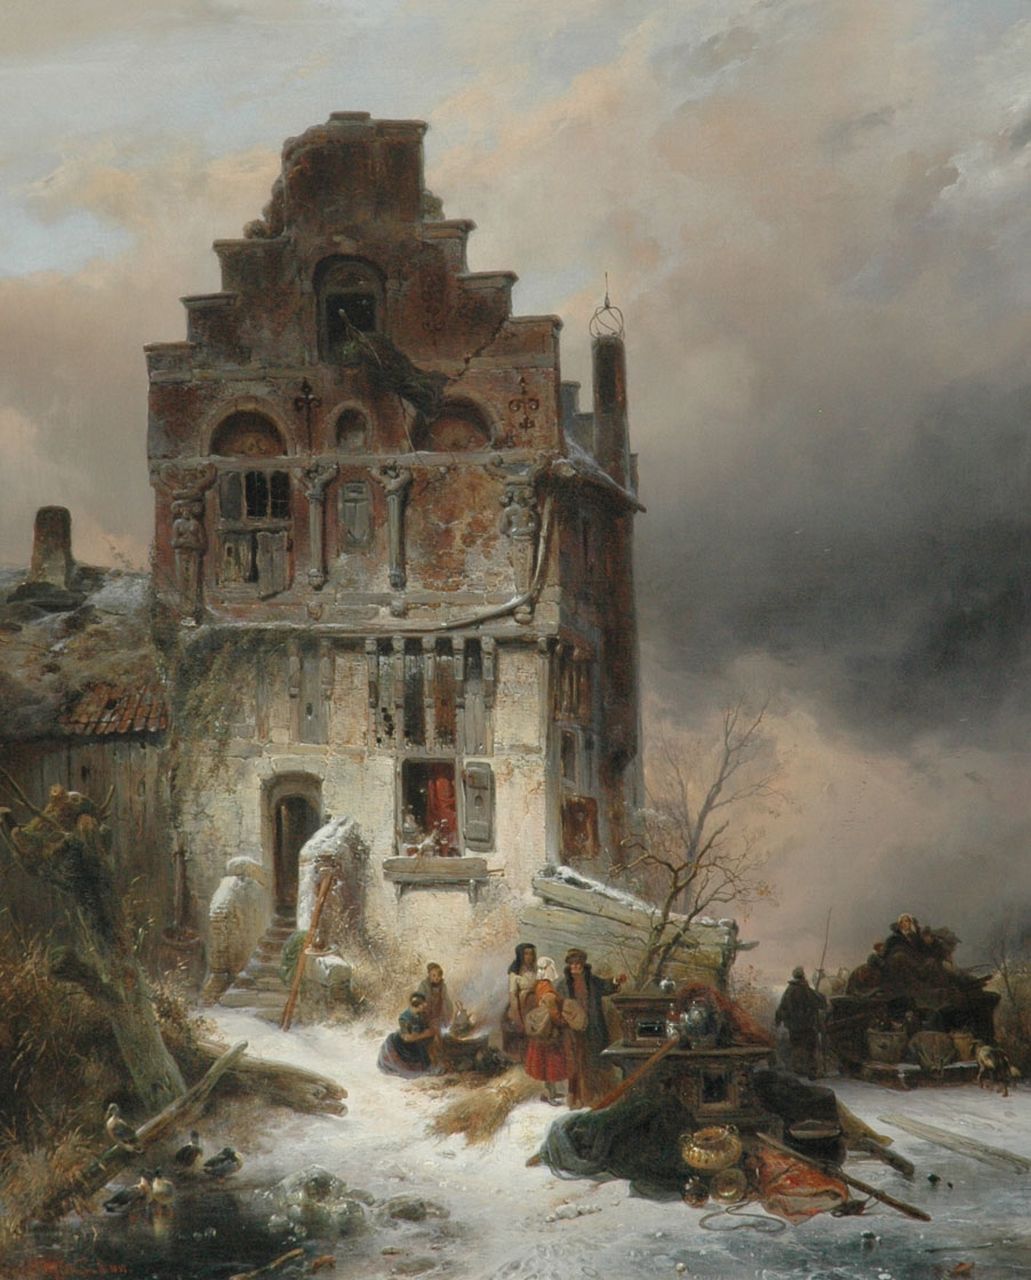 Nuijen W.J.J.  | Wijnandus Johannes Josephus 'Wijnand' Nuijen, Moving house on a winter day, Öl auf Leinwand 112,9 x 91,6 cm, signed l.l. und dated 1837